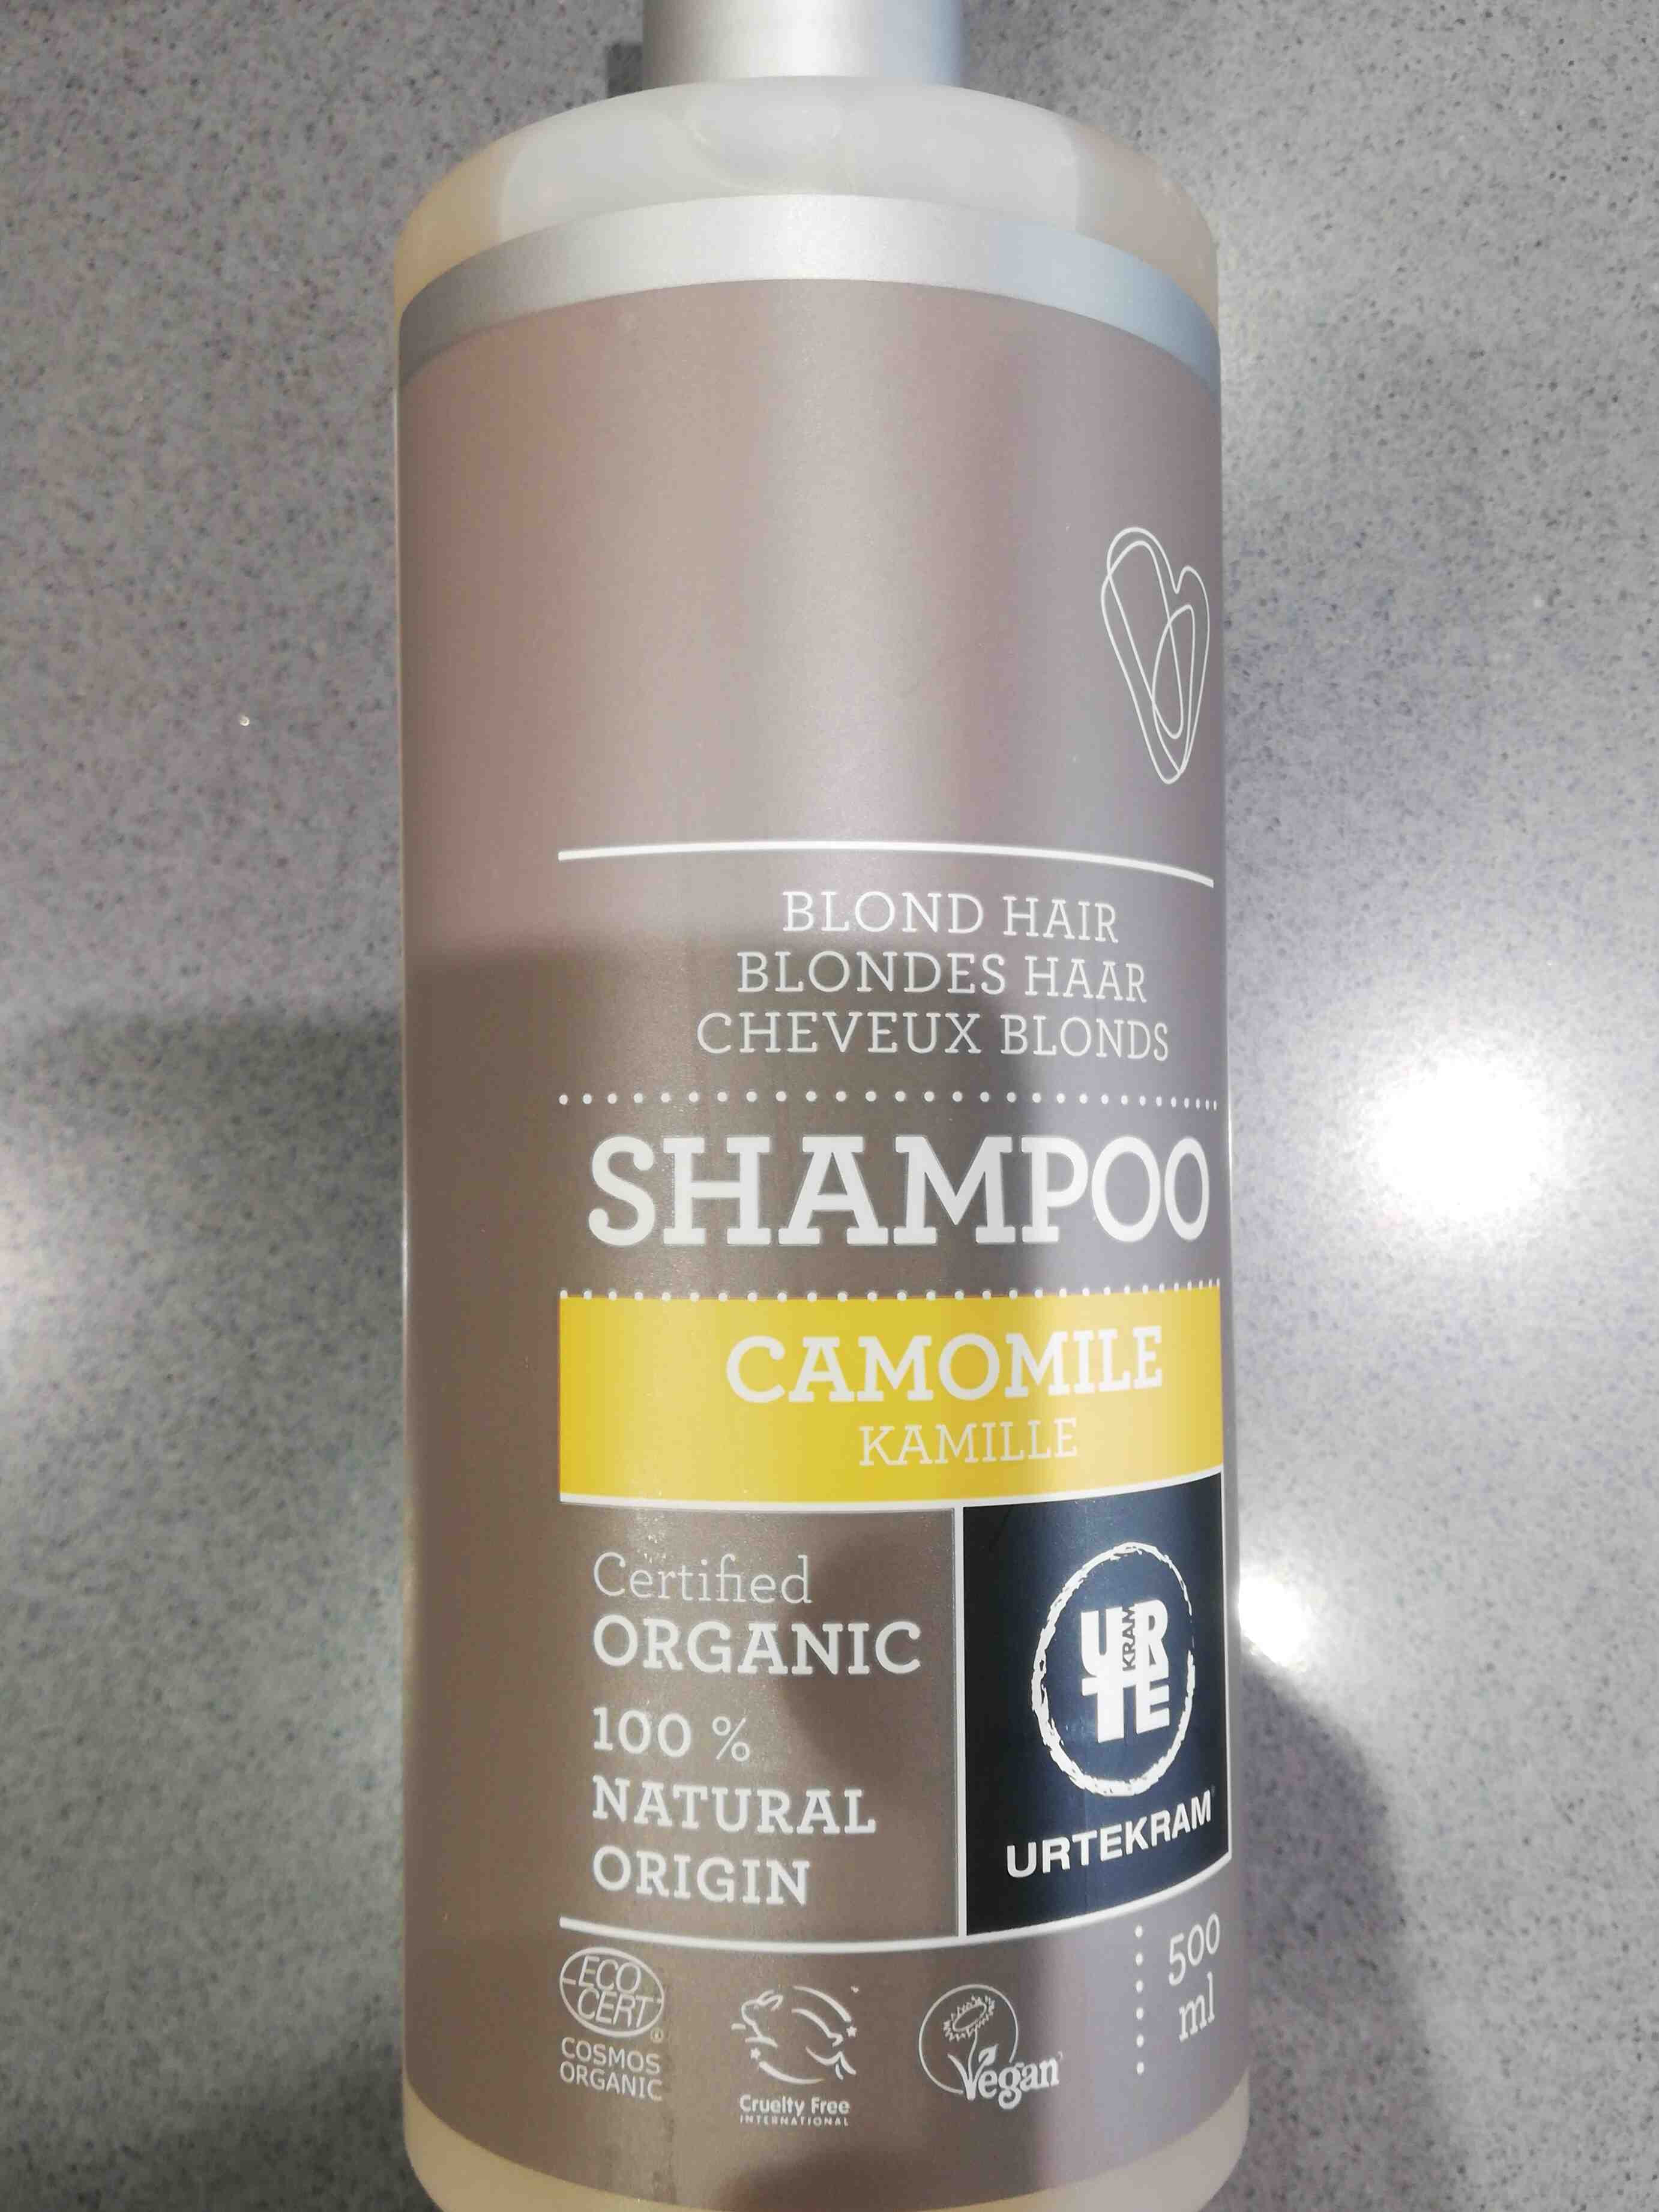 shampoo camomile Urtekram - Produit - en